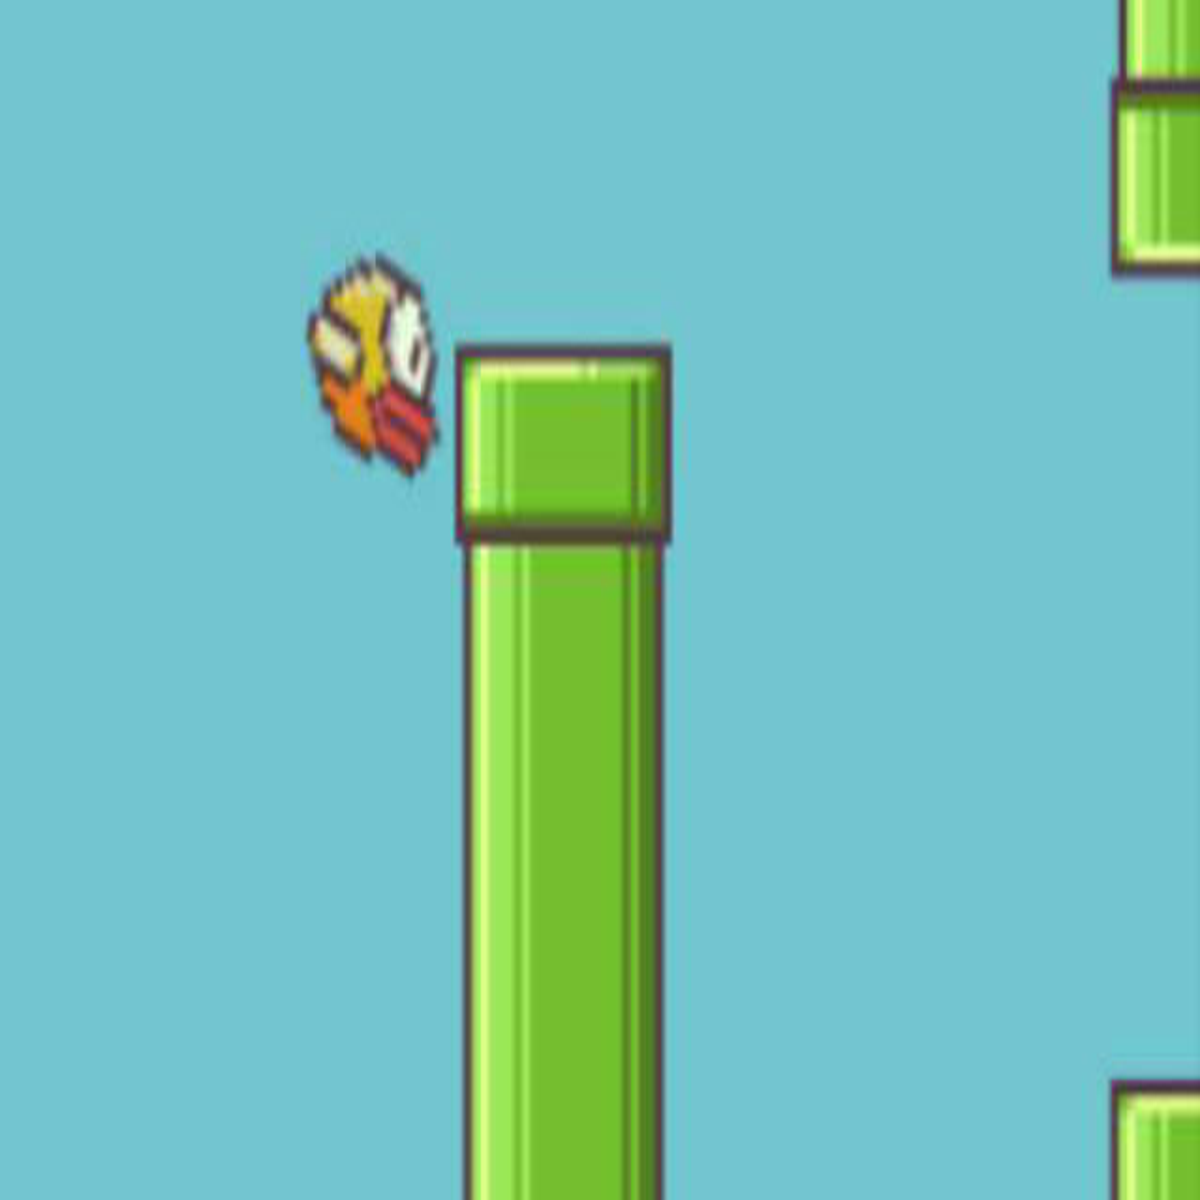 Flappy Bird Is Back!